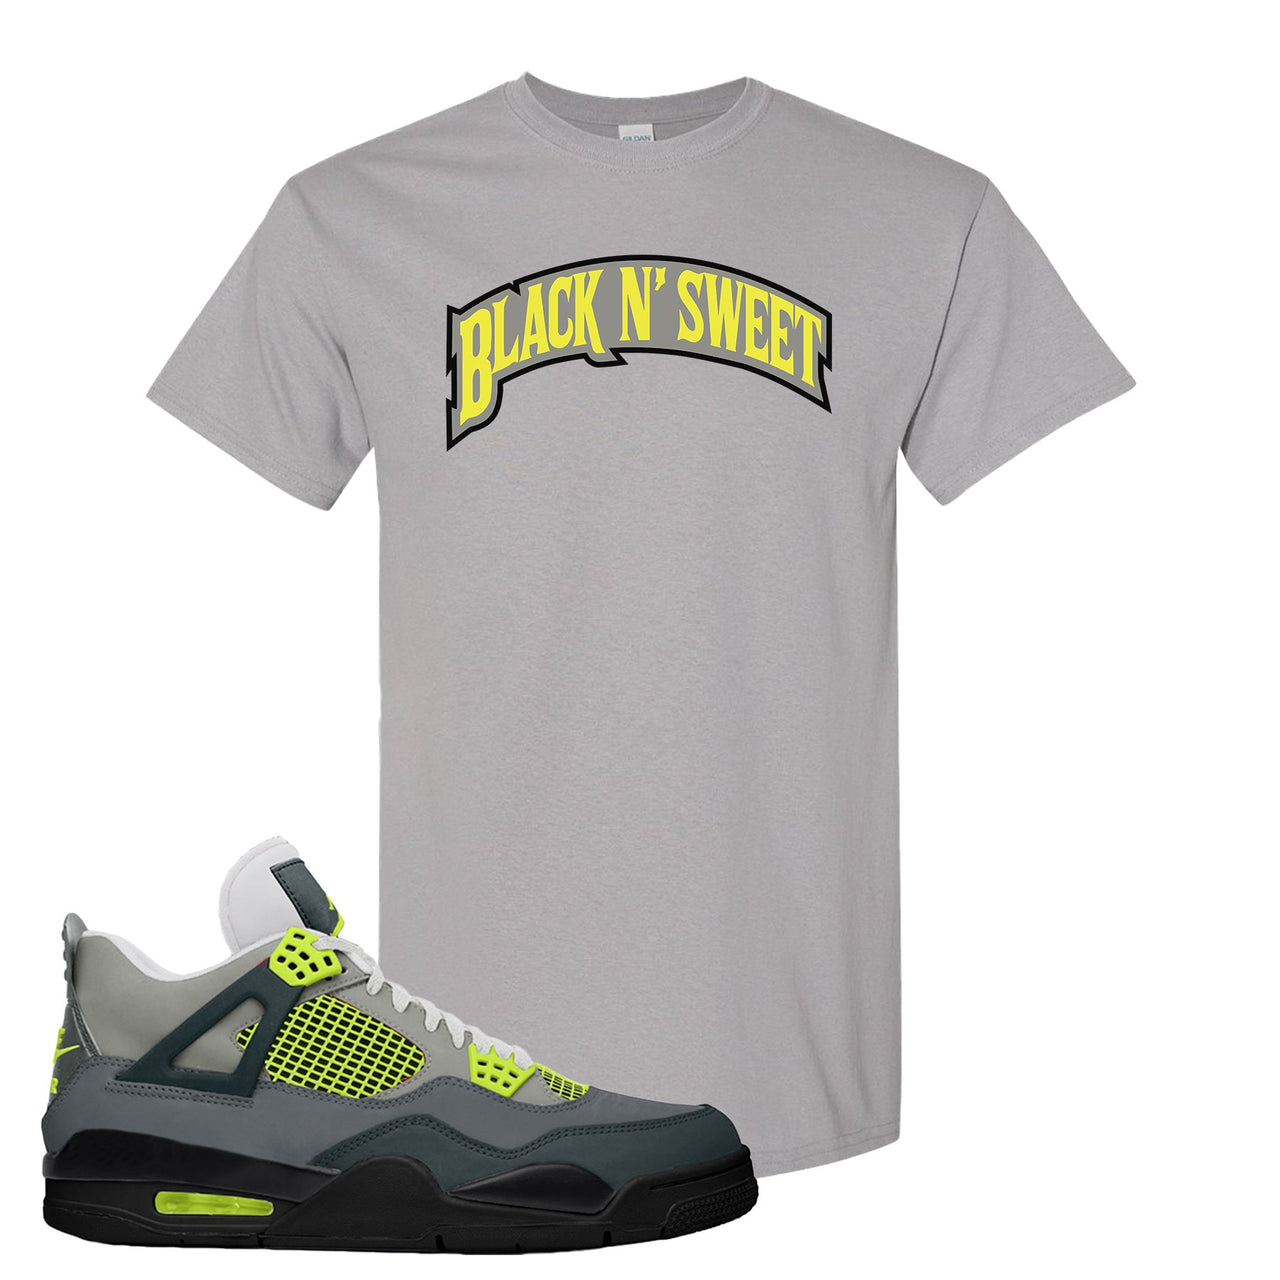 Jordan 4 Neon Sneaker Gravel T Shirt | Tees to match Nike Air Jordan 4 Neon Shoes | Black N Sweet Arch